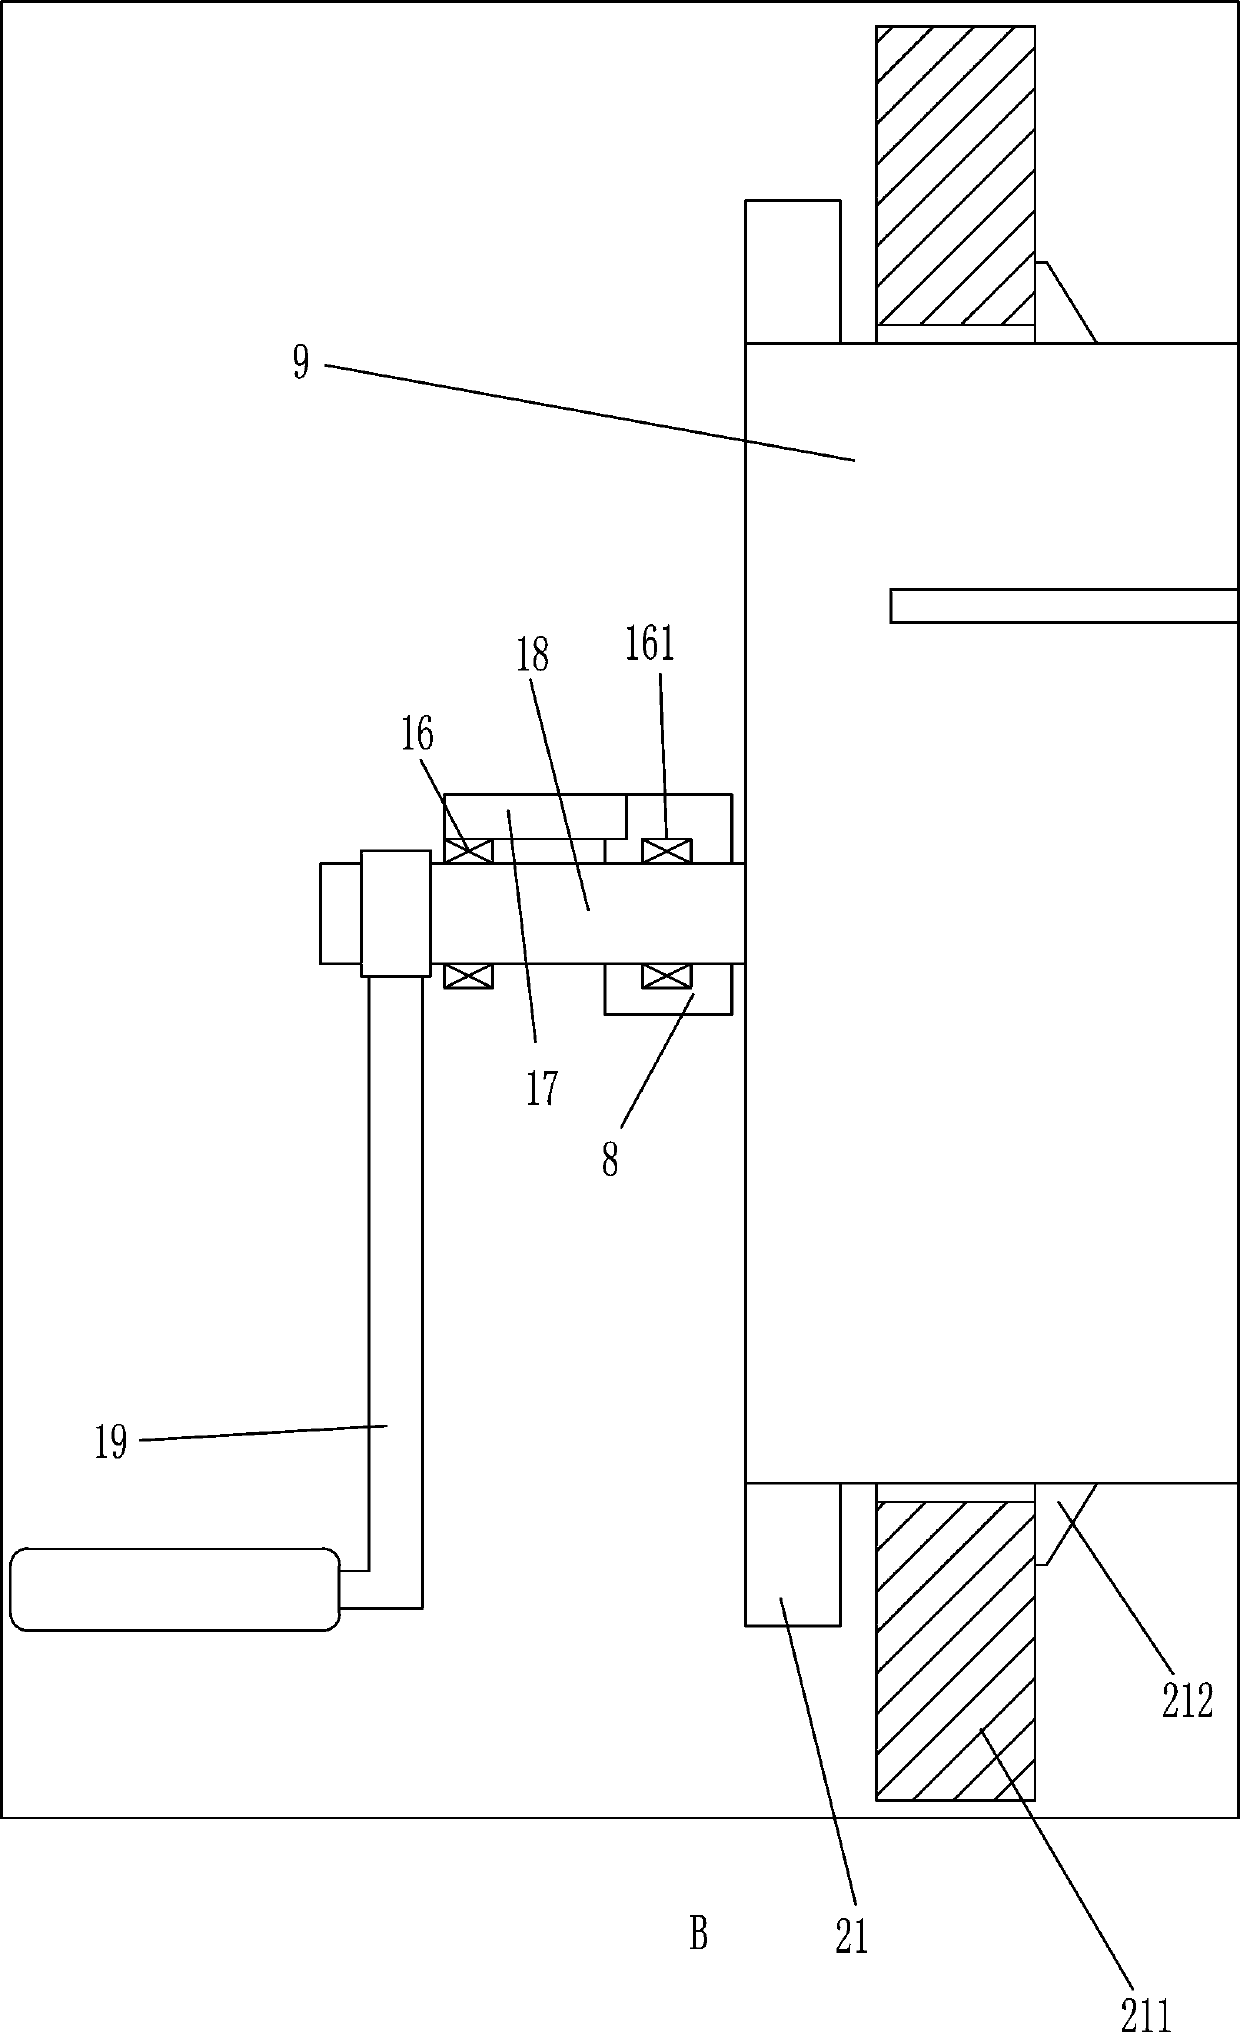 Manual workshop cloth winding machine